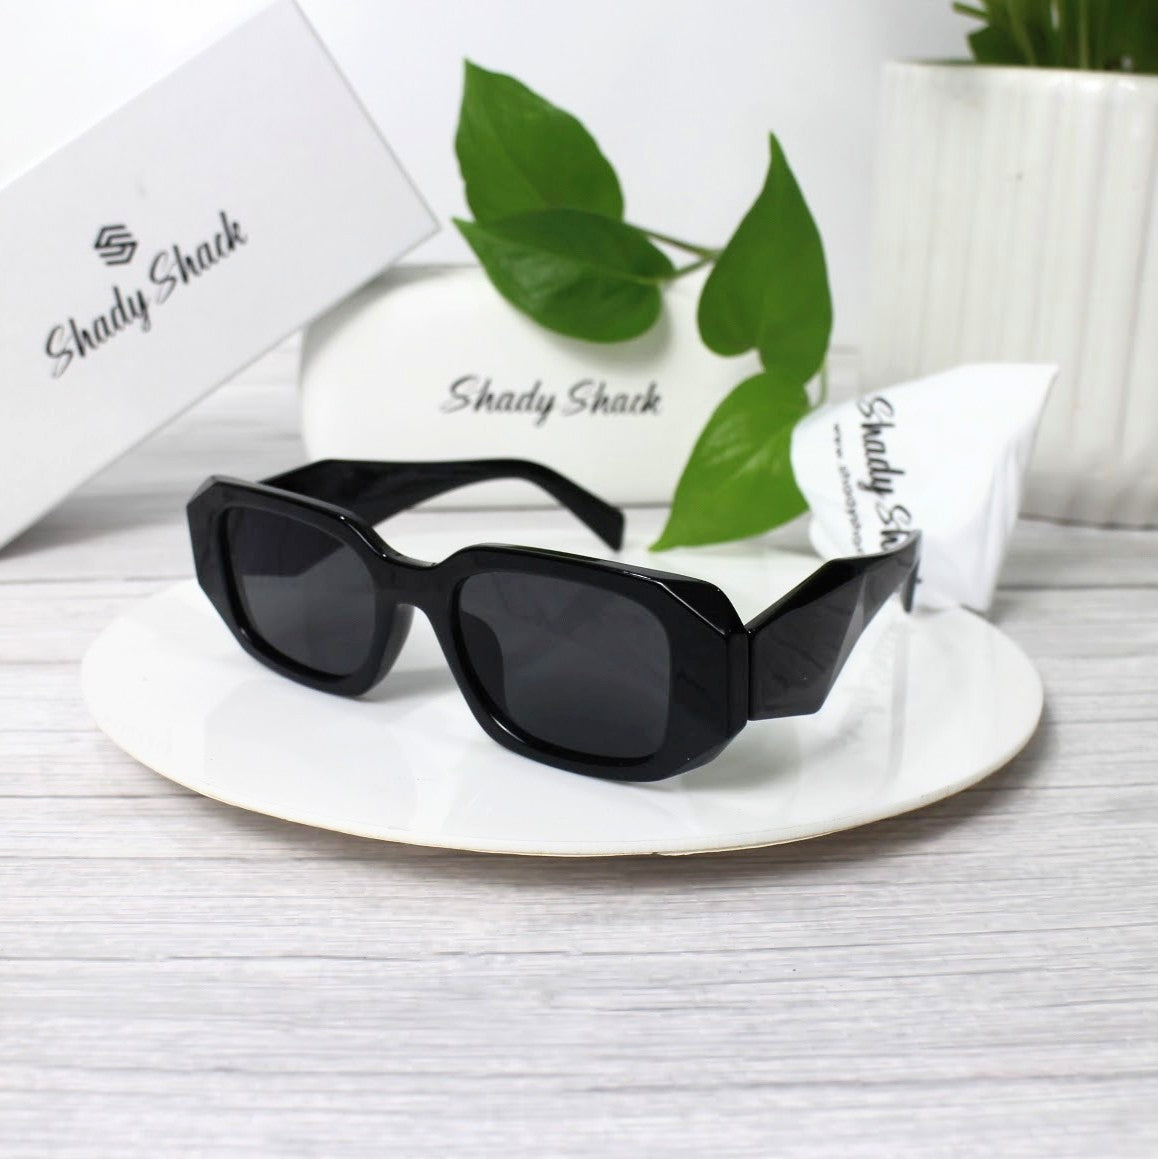 Bandit black - Sunglasses